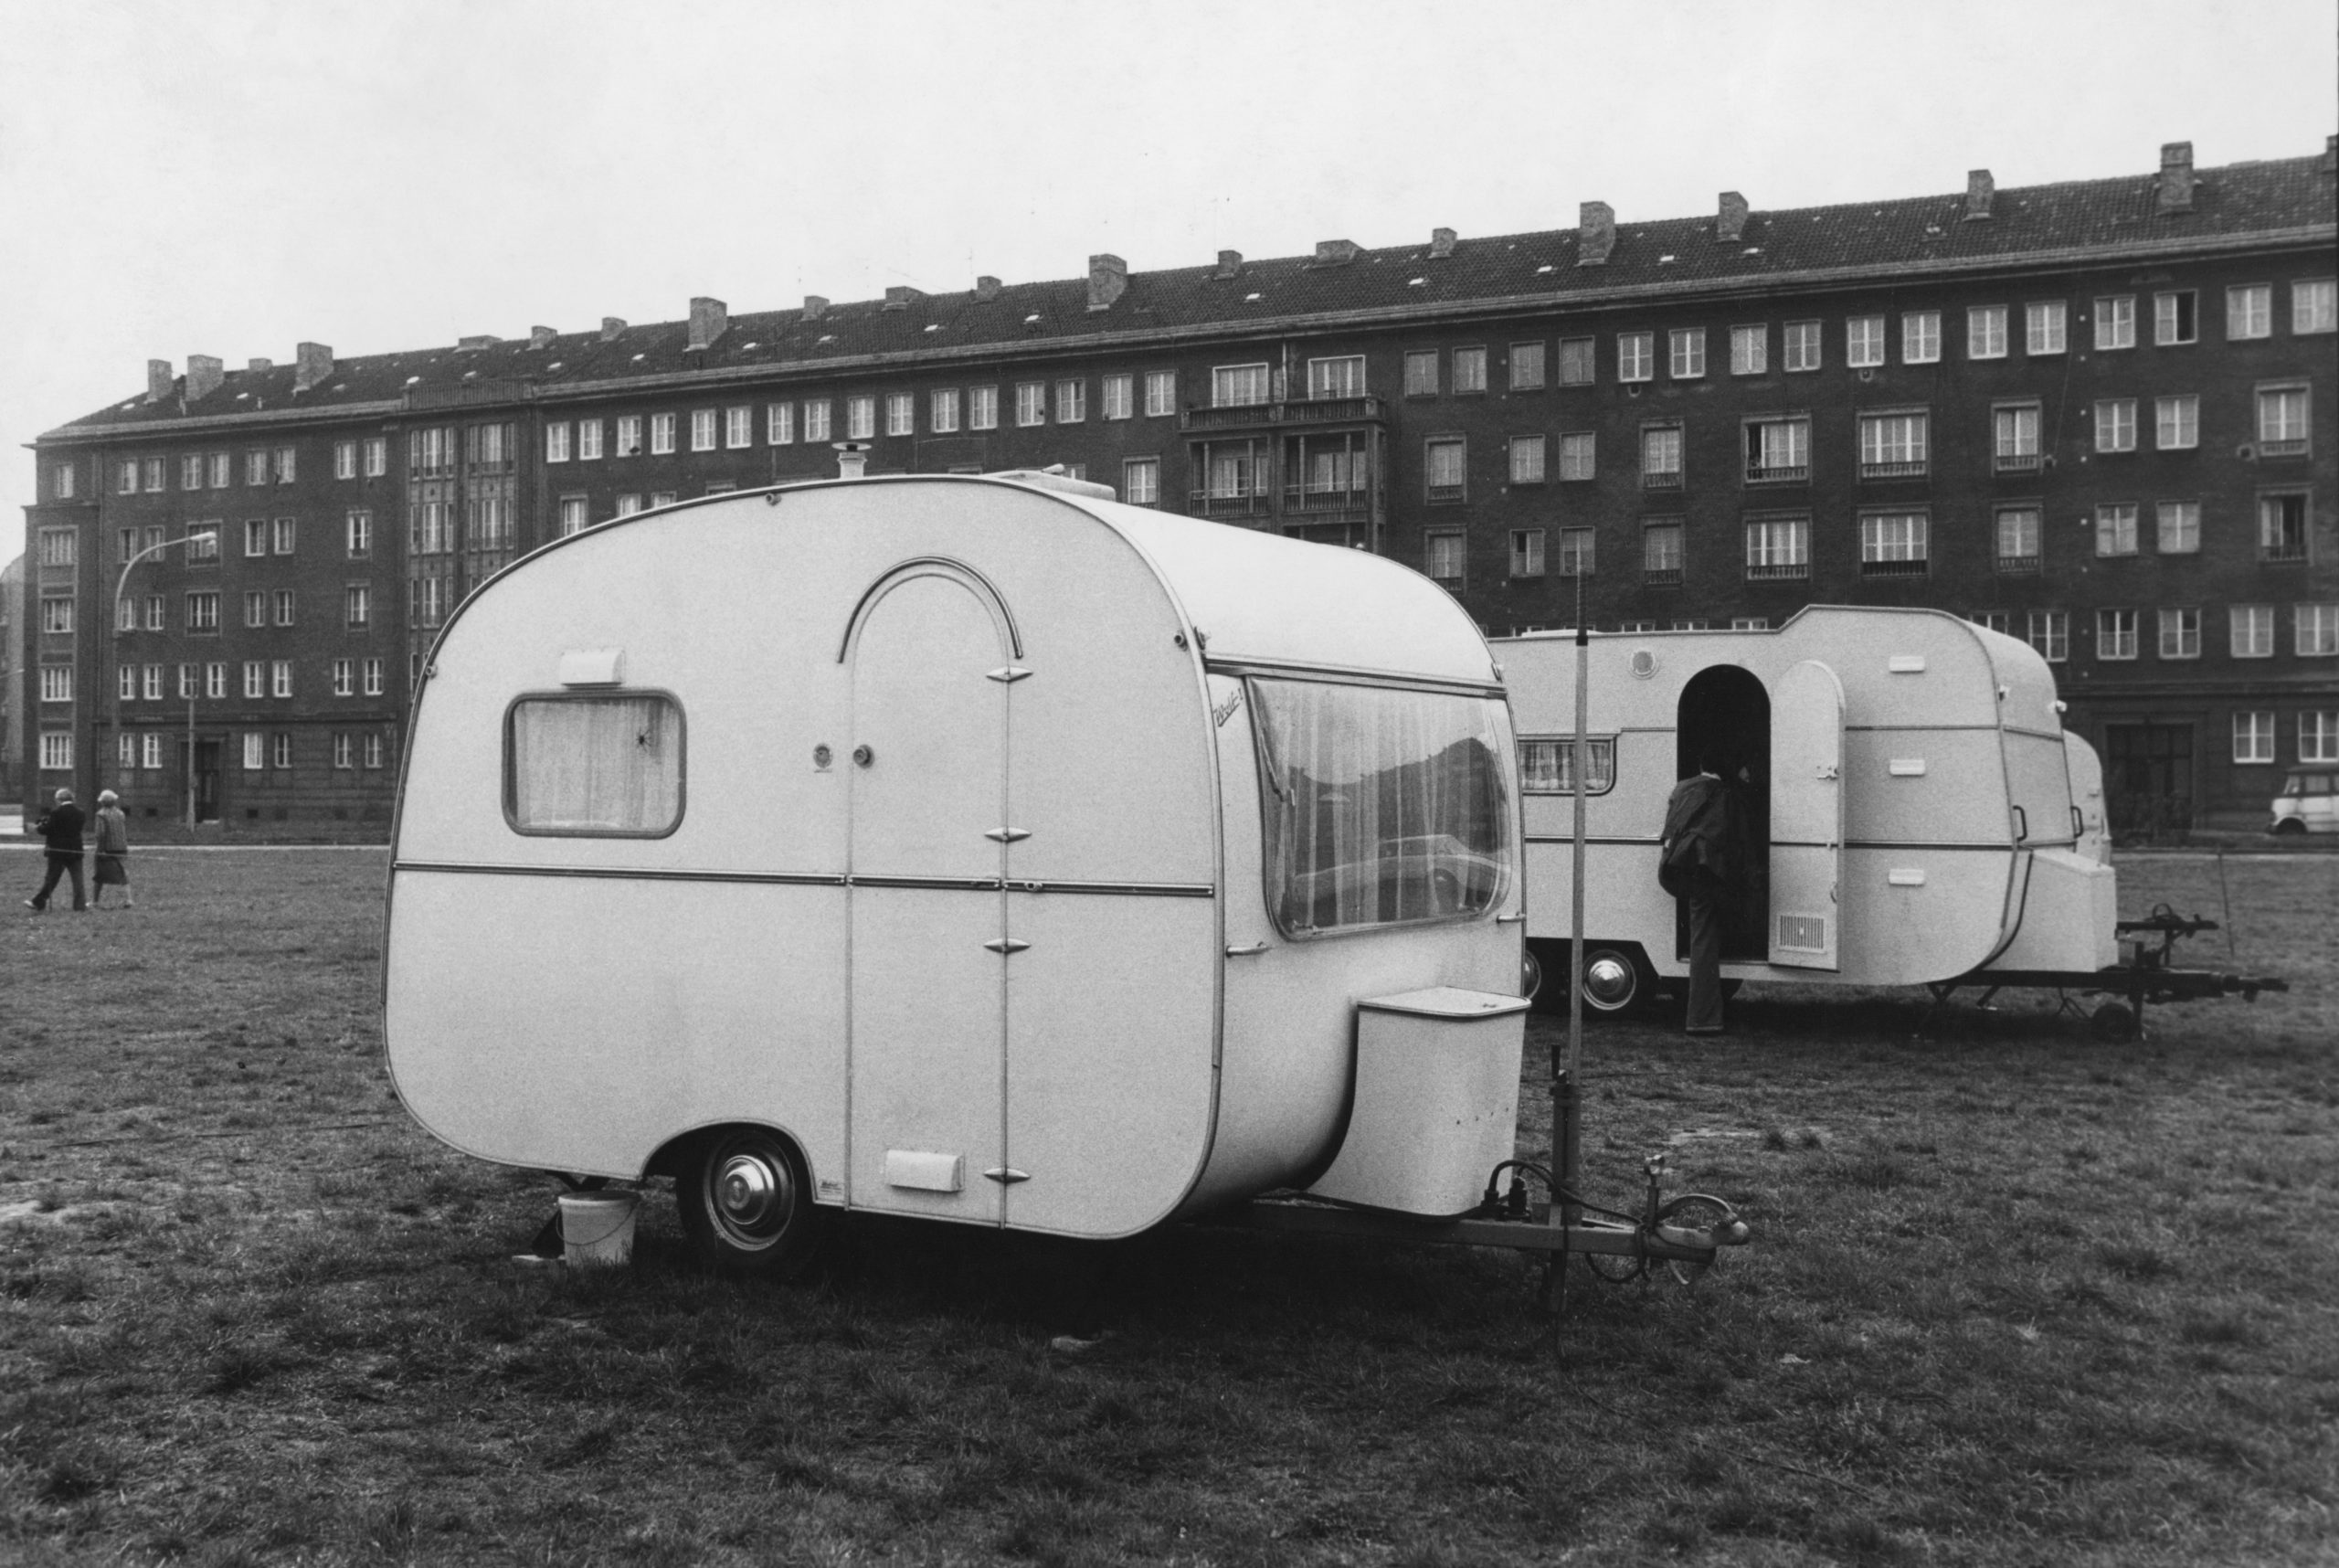 Sibylle Bergemann, Caravan-Ausstellung, Berlin 1980 © Estate Sibylle Bergemann/OSTKREUZ. Courtesy Loock Galerie, Berlin